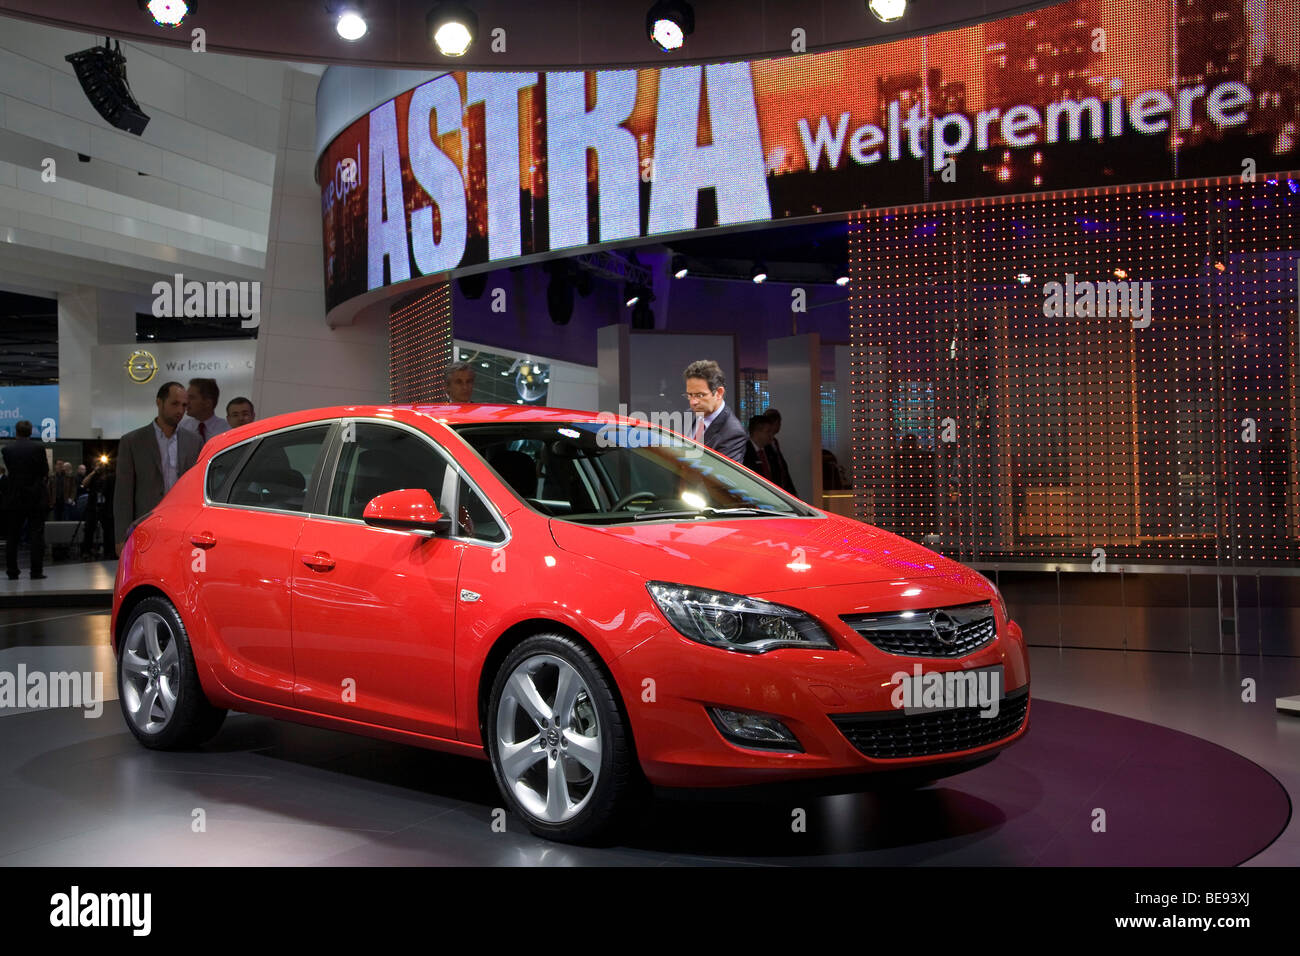 Opel Astra world premier at a European motor show. Stock Photo